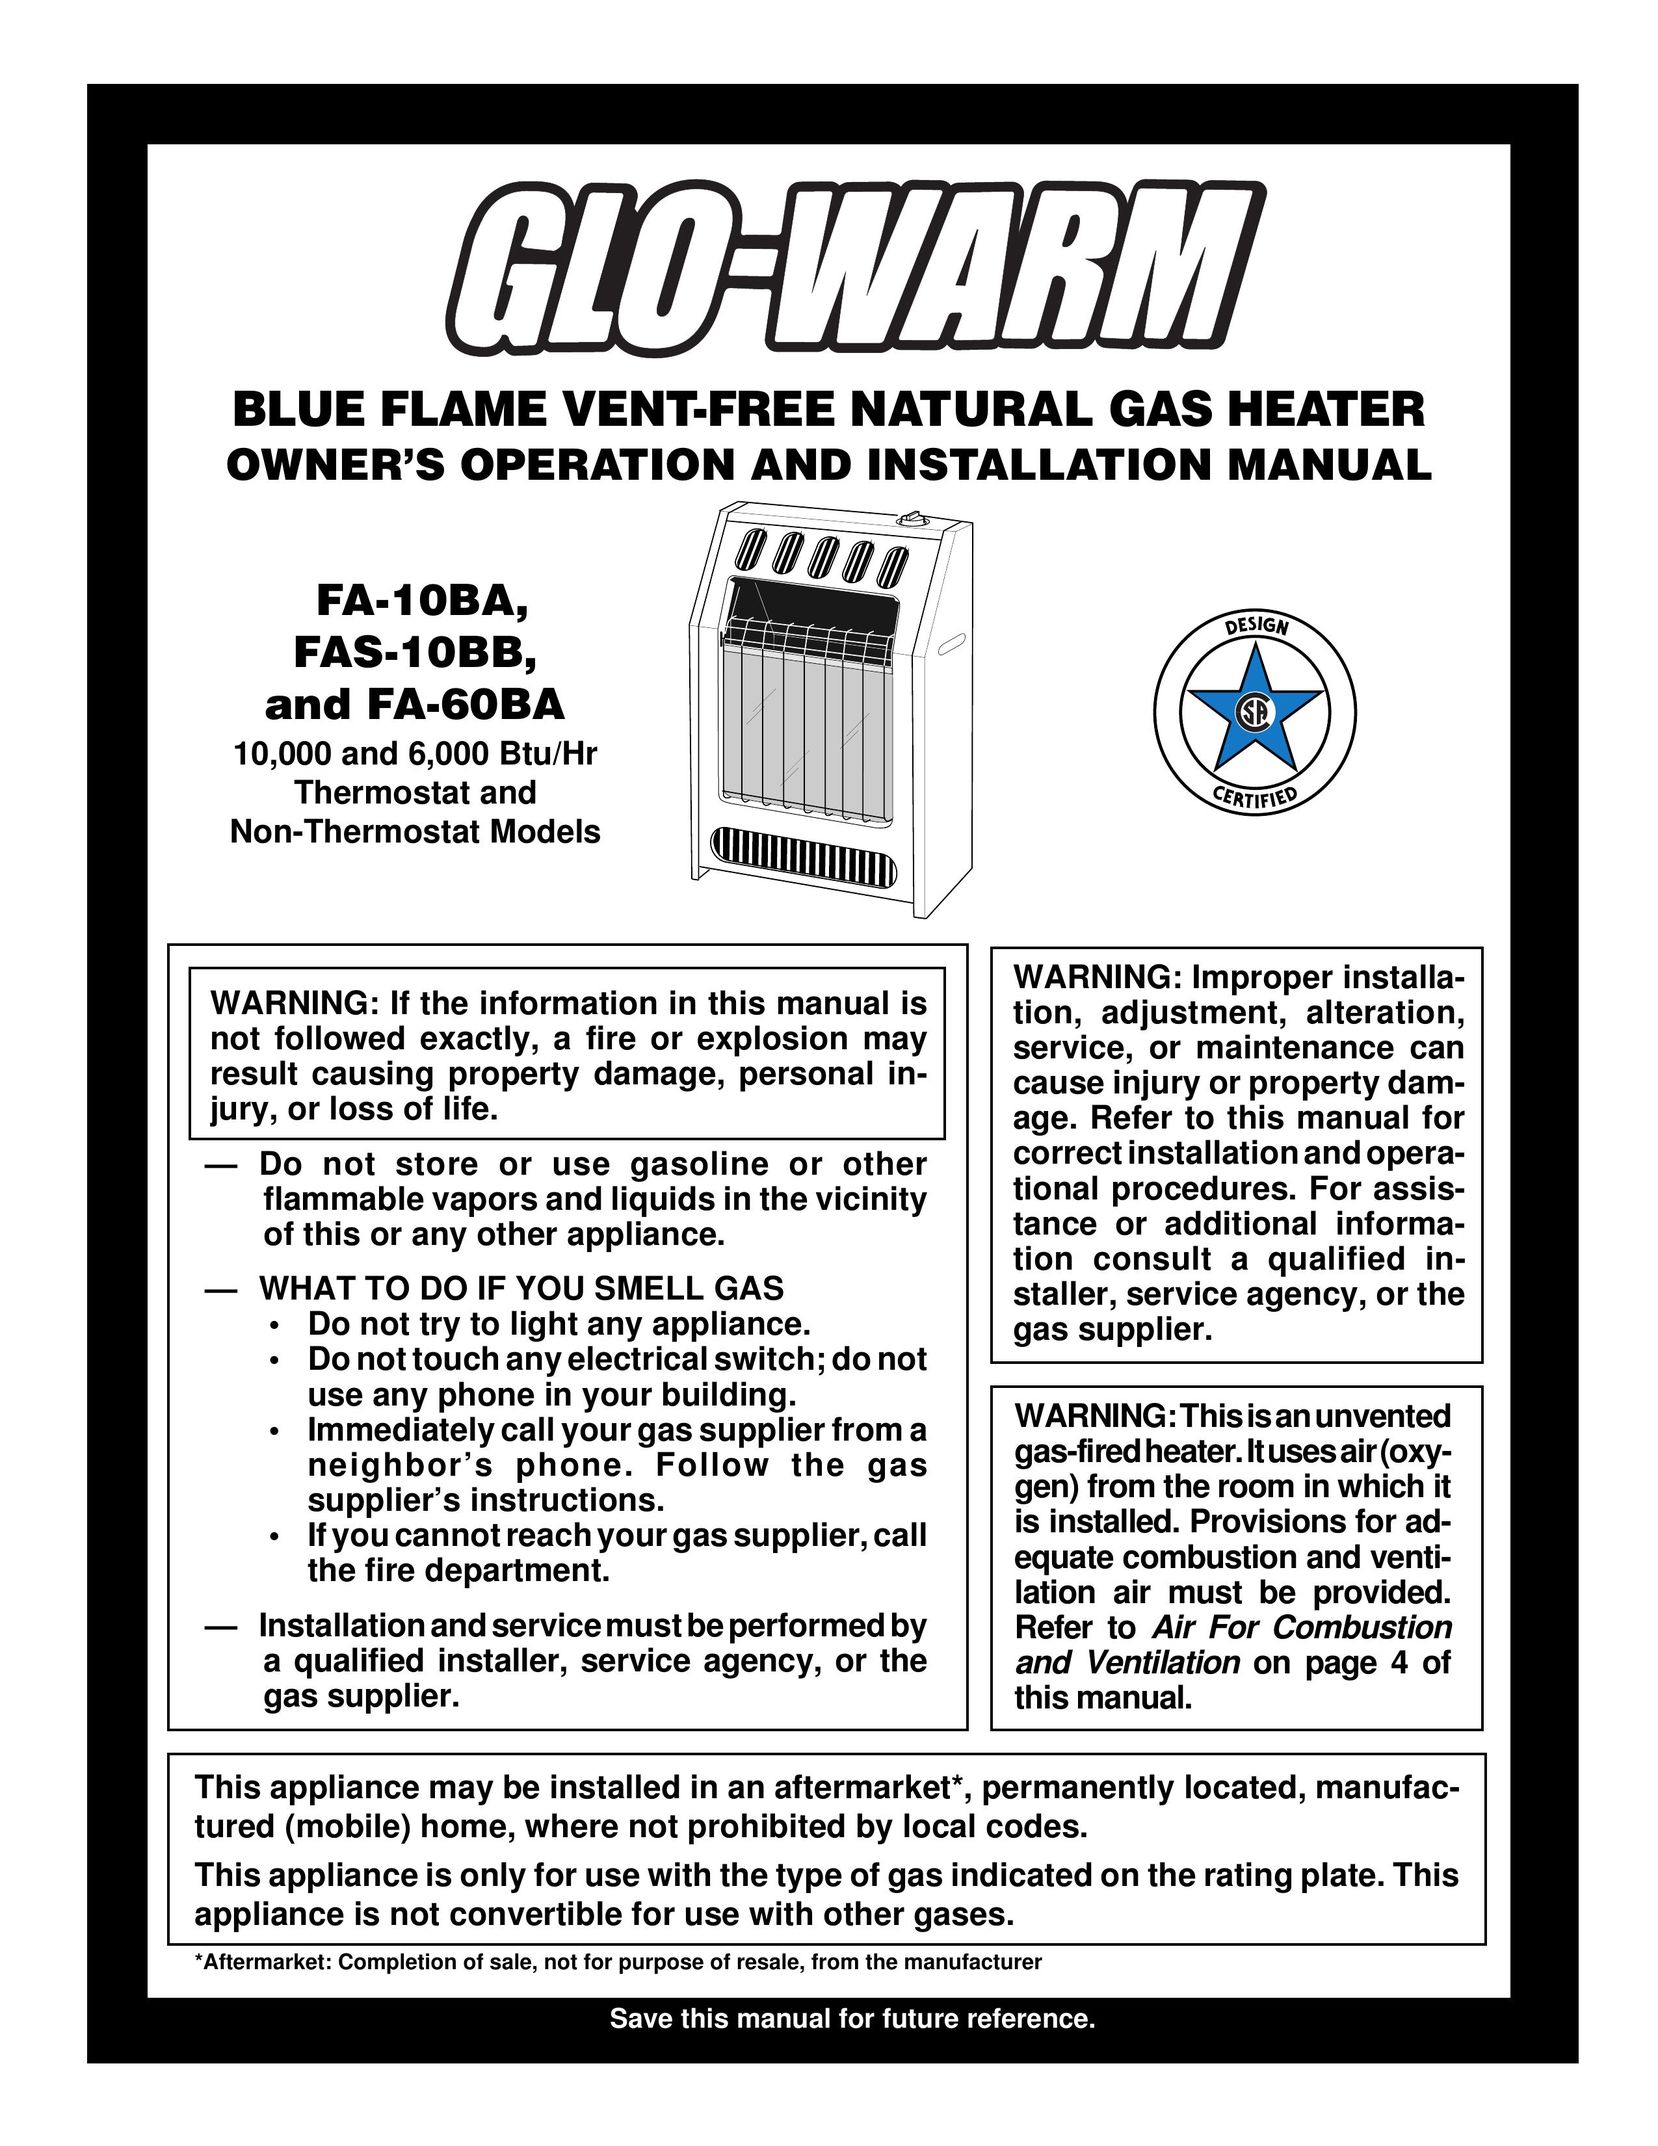 Desa FAS-10BB Gas Heater User Manual